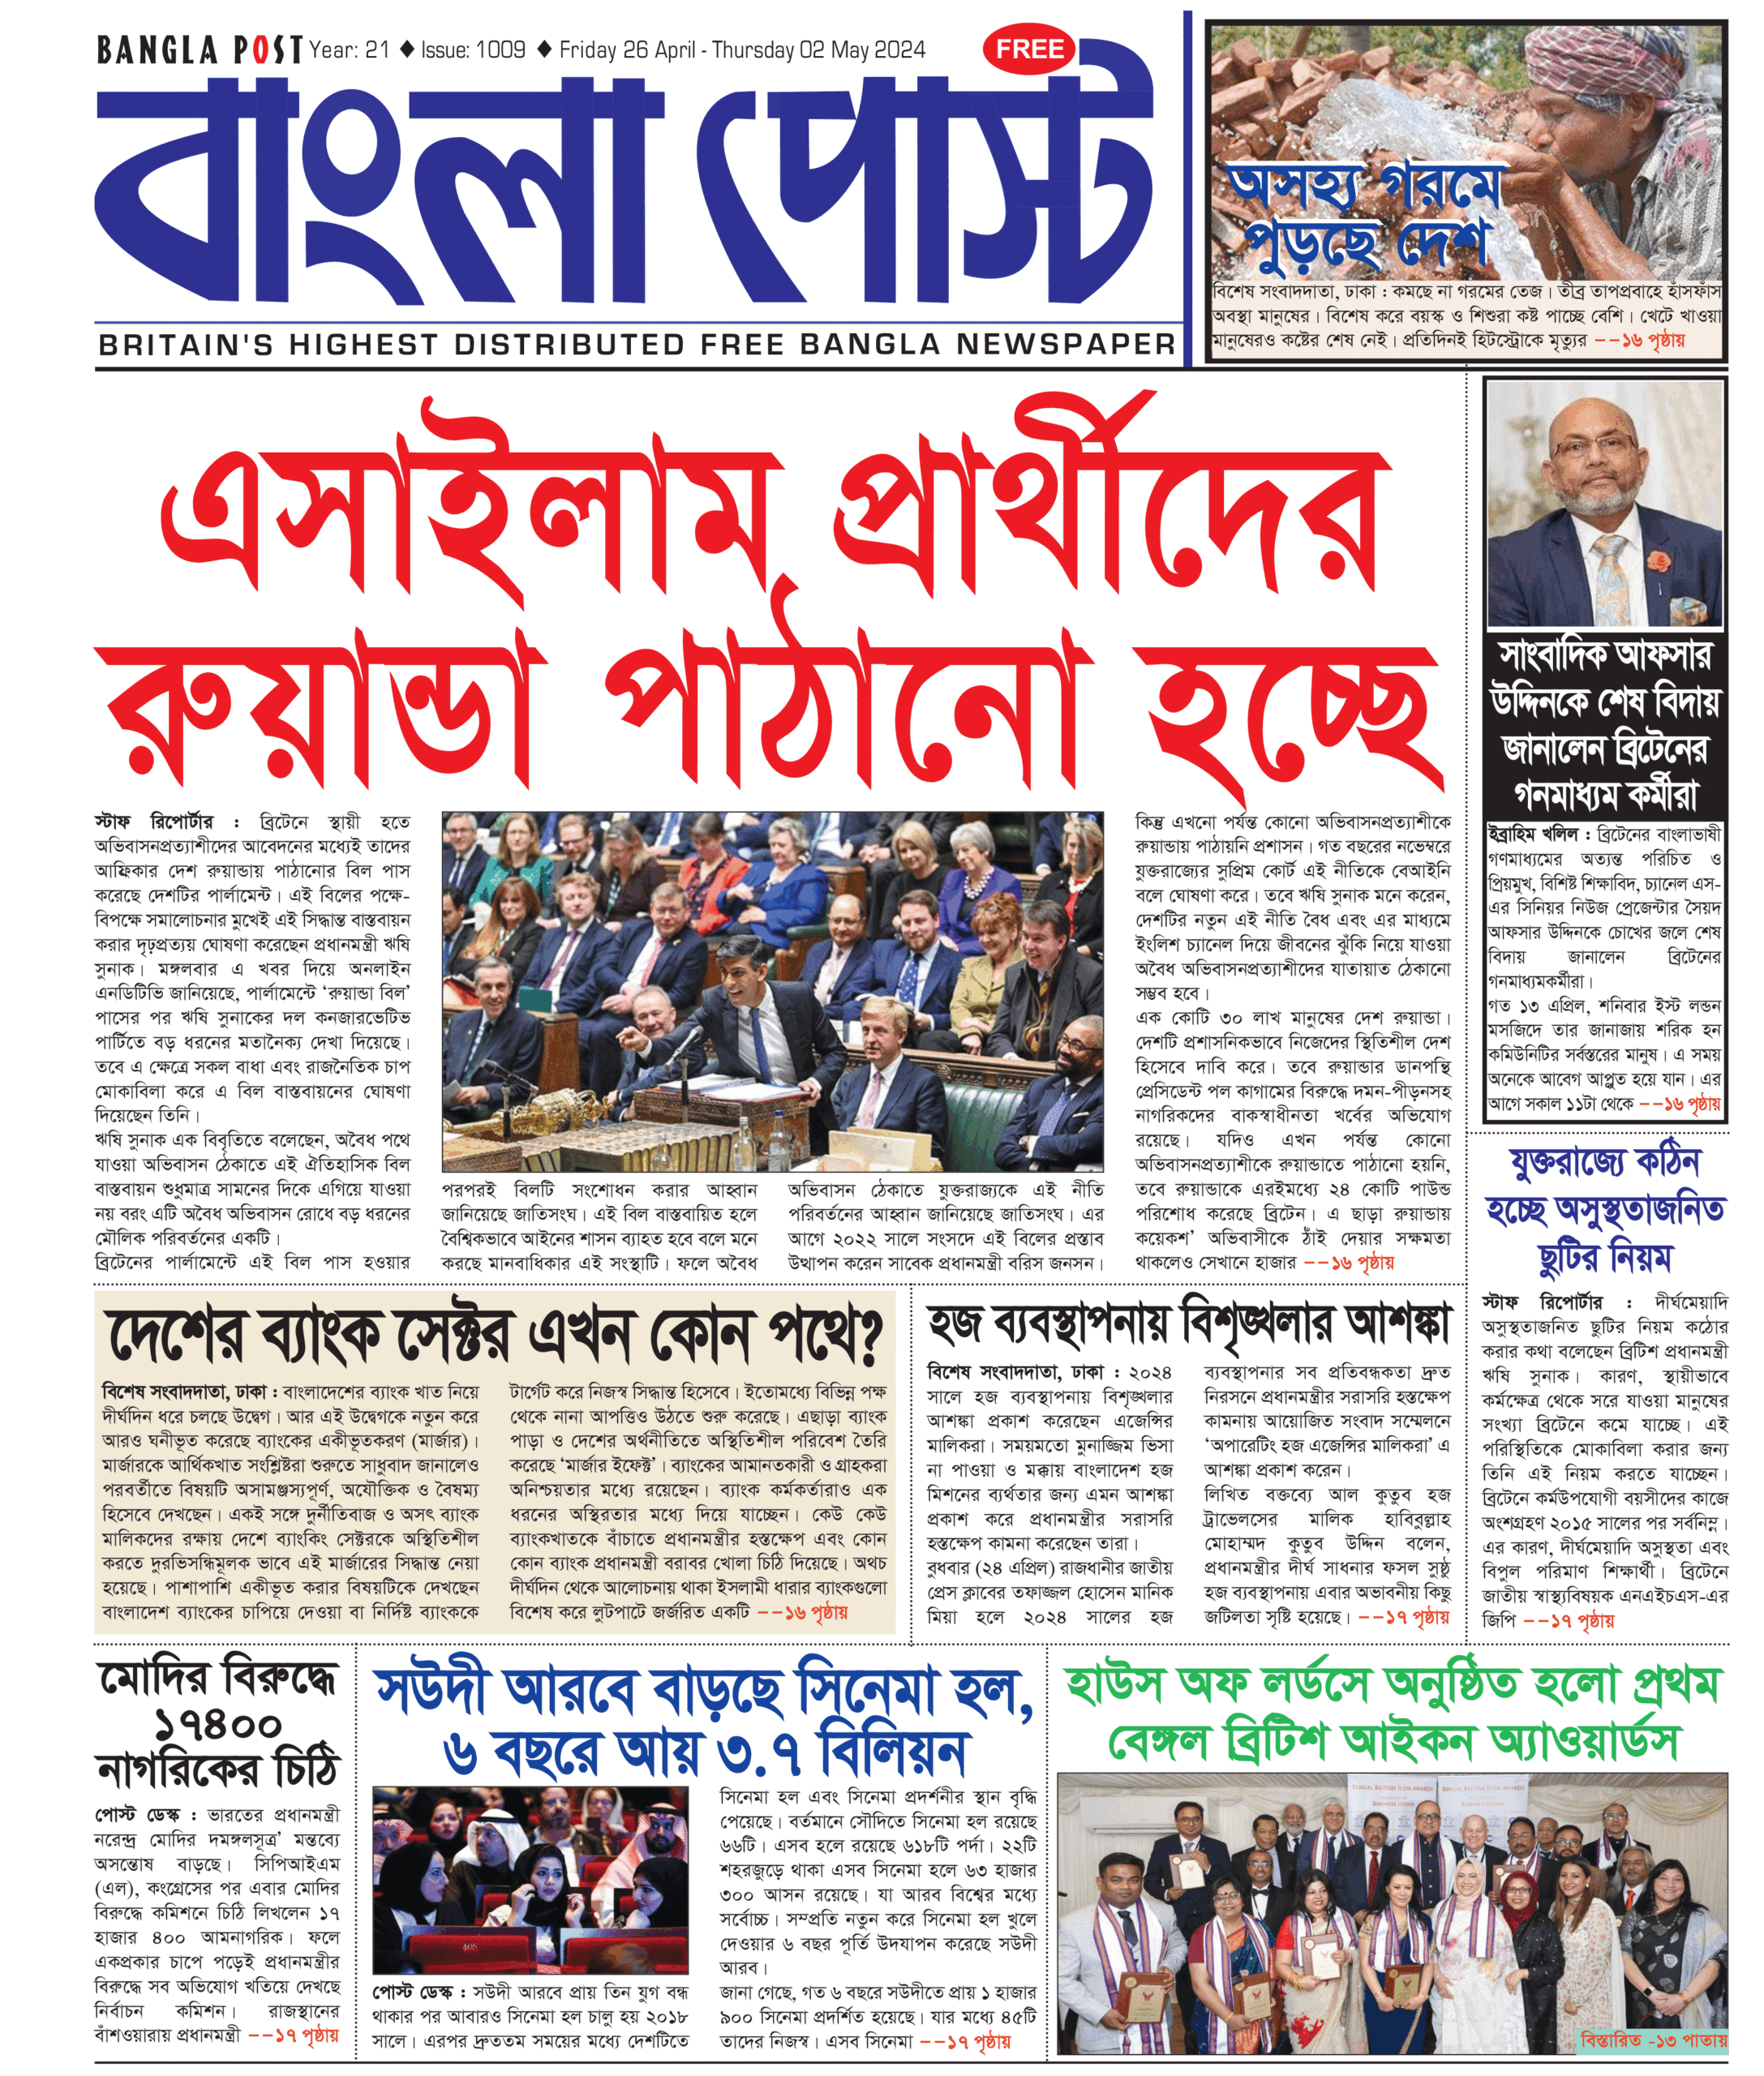 Bangla Post Issue – 1009 | 26 April 2024